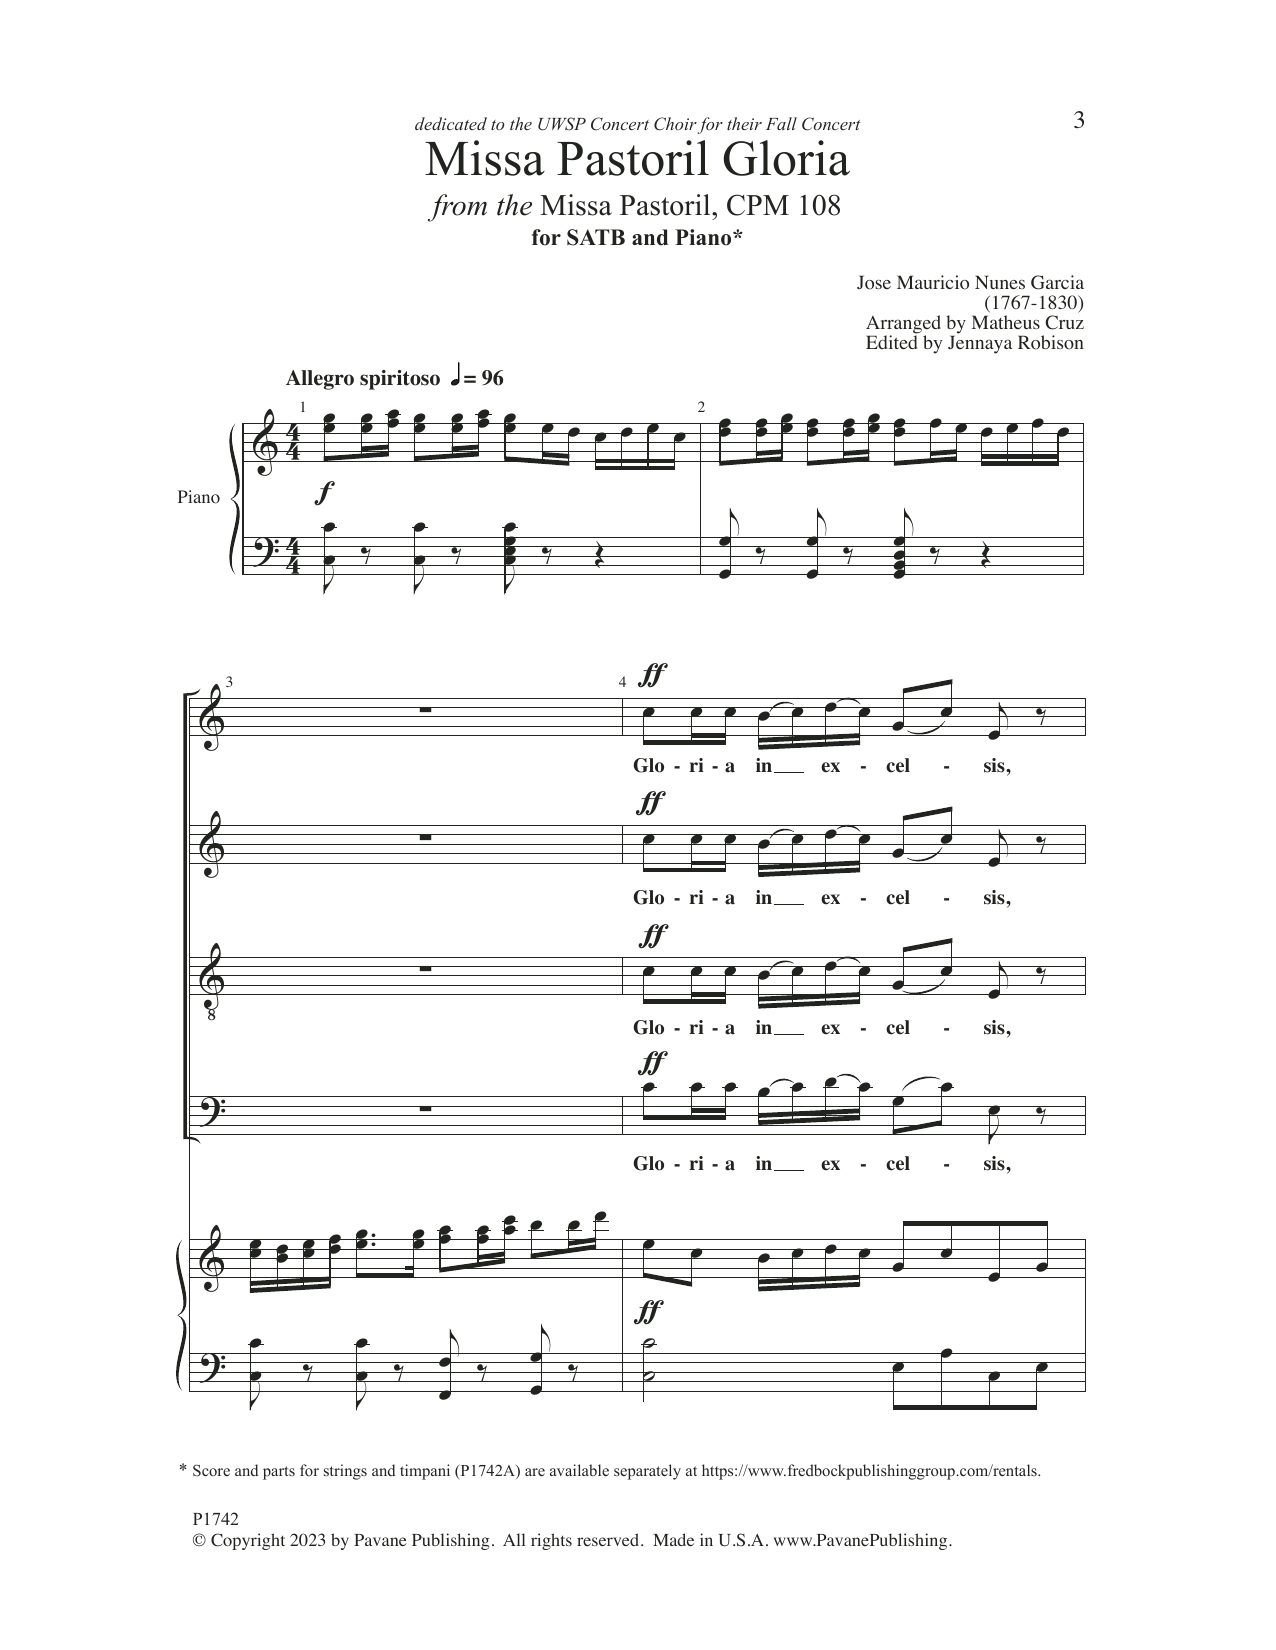 Matheus Cruz Missa Gloria Pastoril (from the Missa Pastoril, CPM 108) sheet music notes and chords arranged for SATB Choir